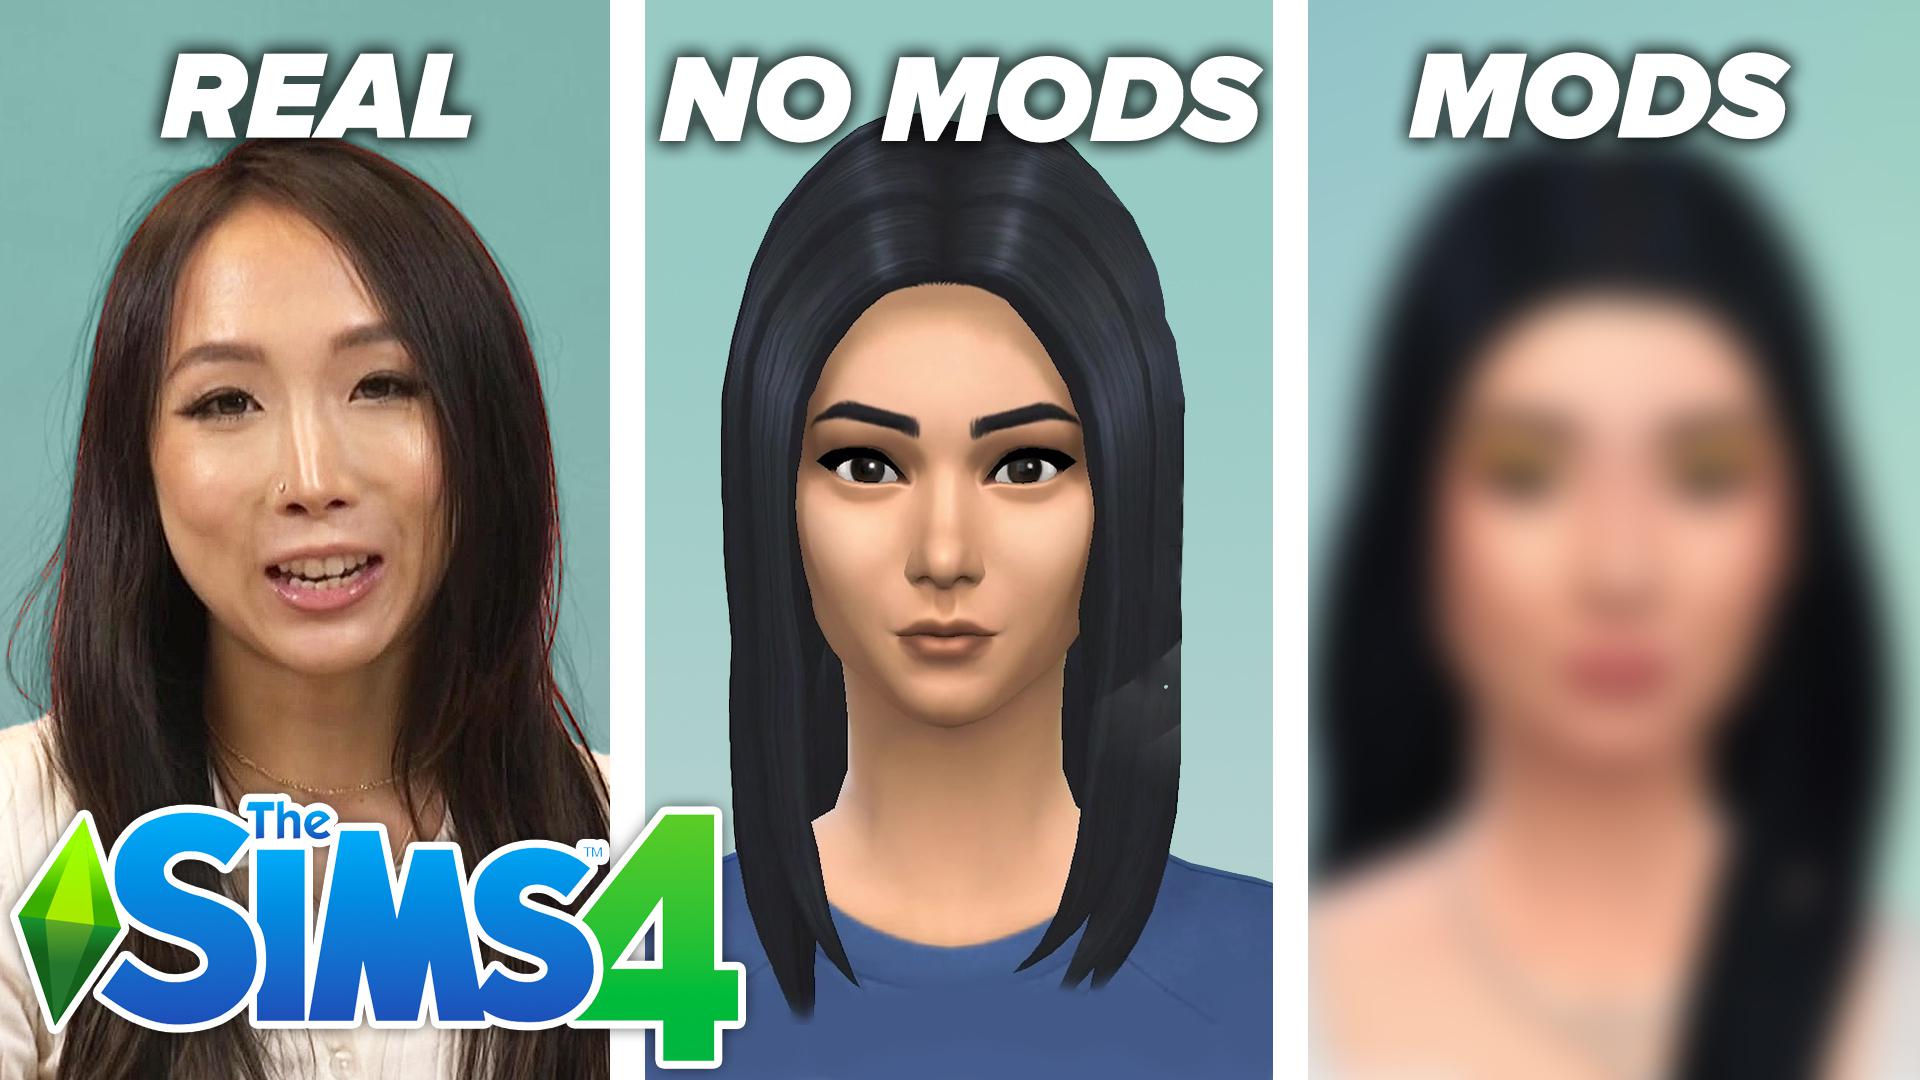 sims 4 mythical creatures mod